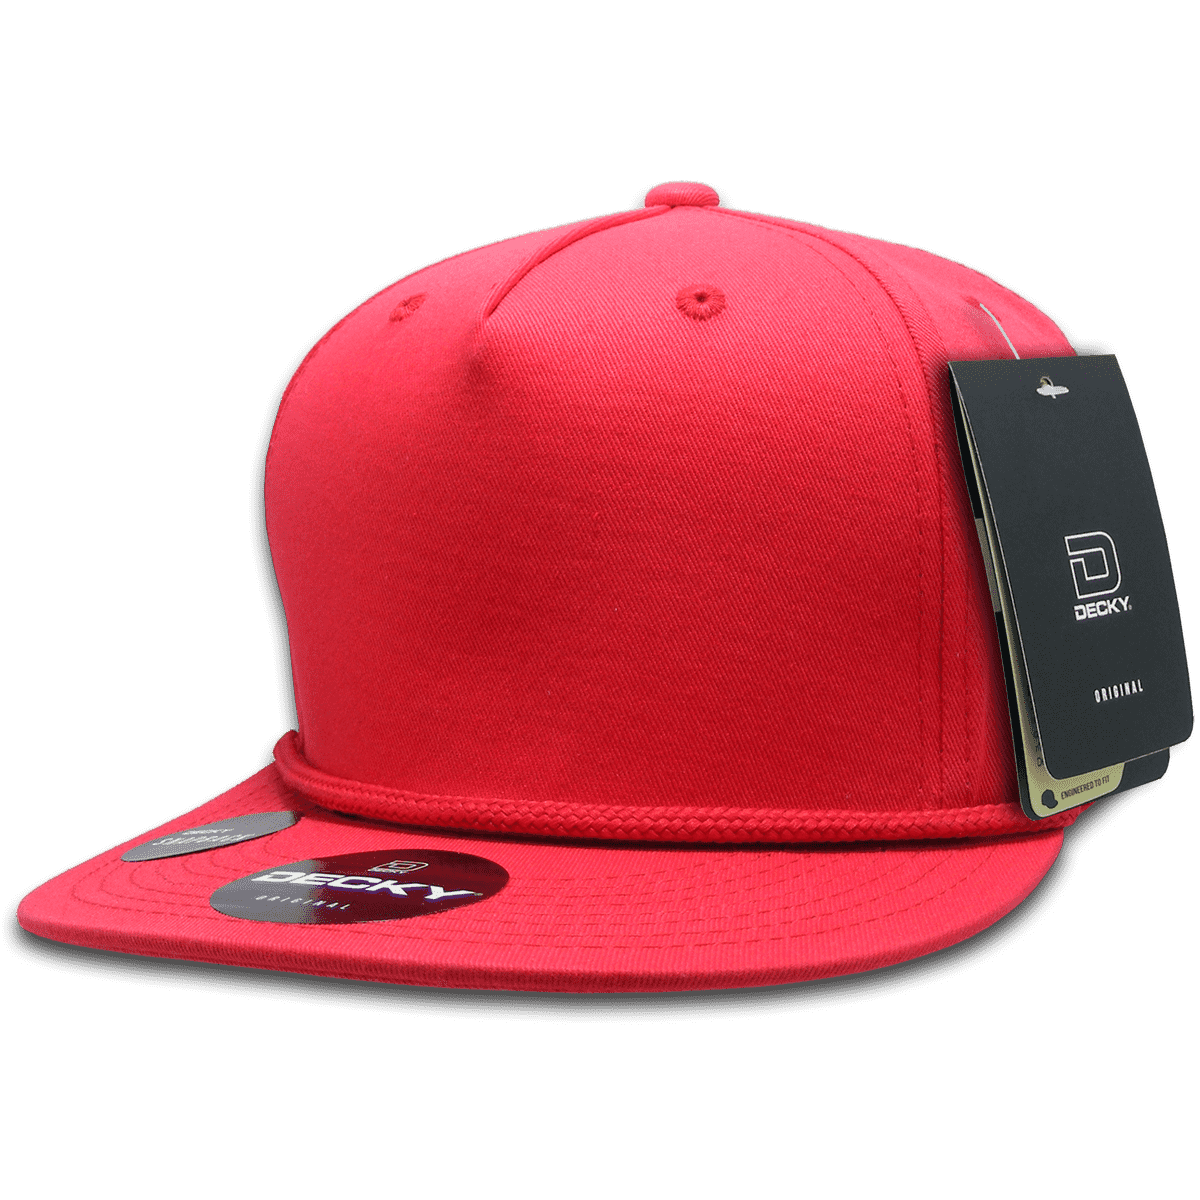 Decky 1041 Classic Flat Bill Golf Cap - Red - HIT a Double